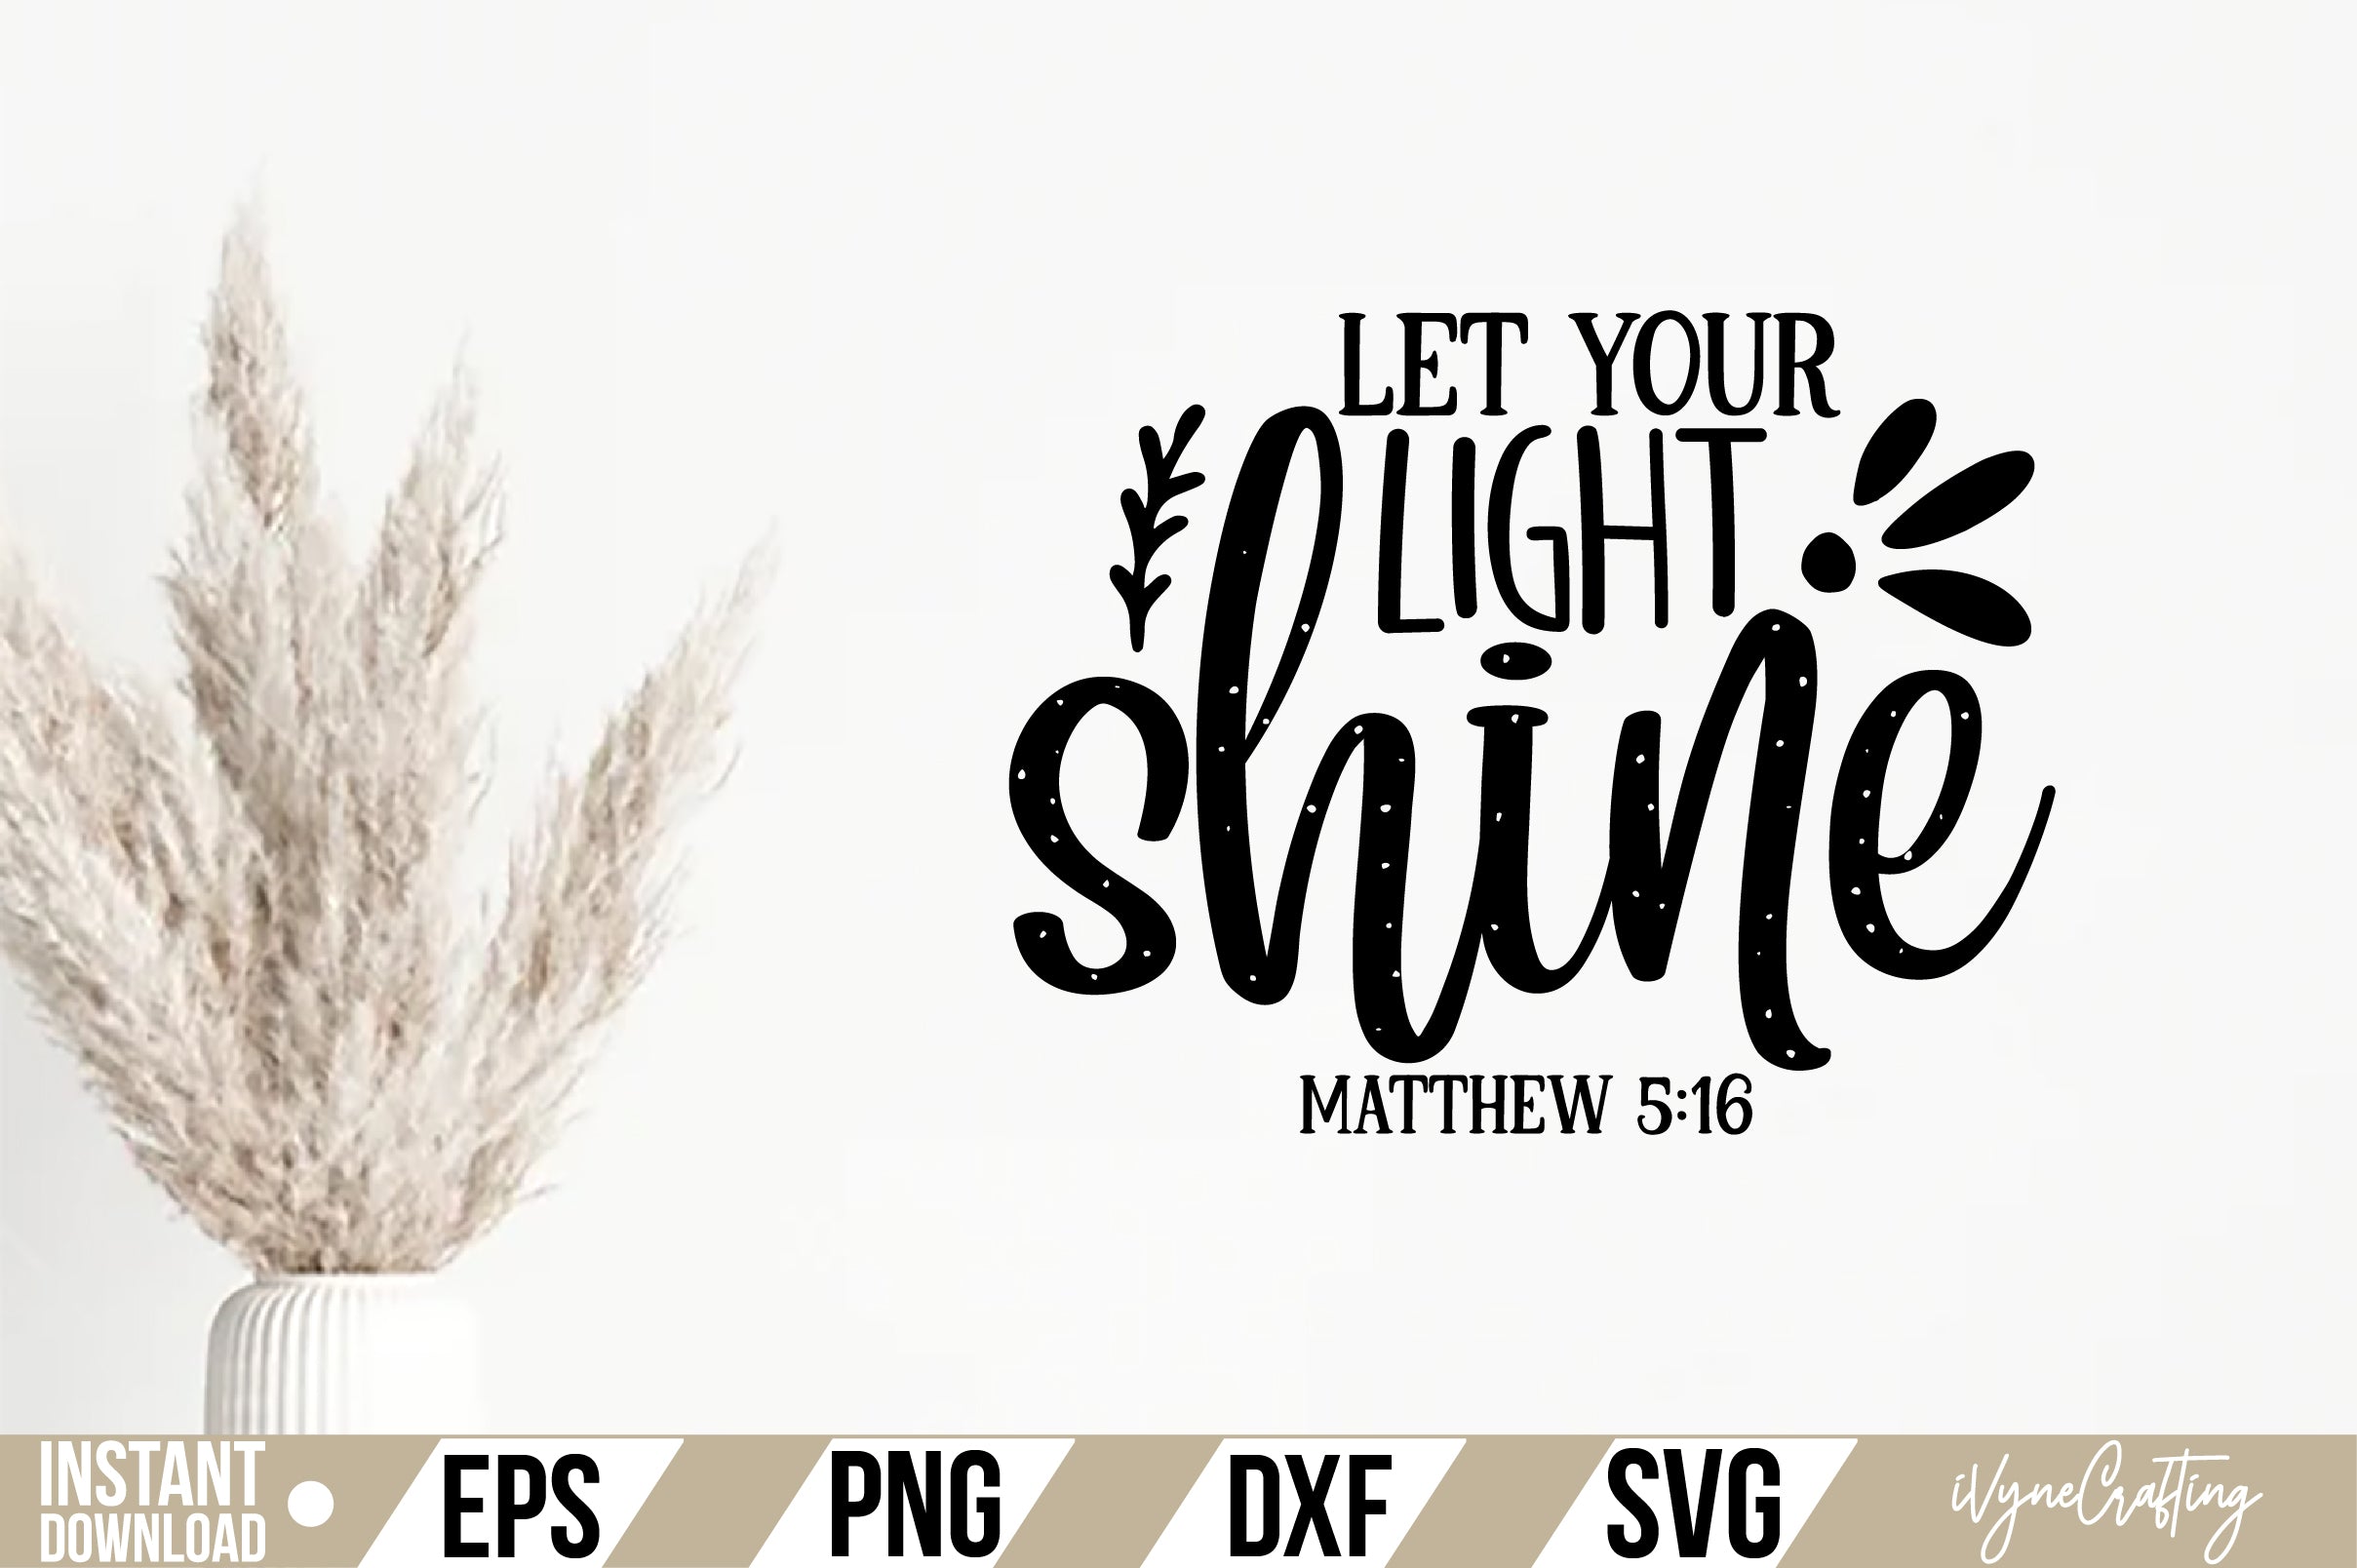 Let your light shine matthew